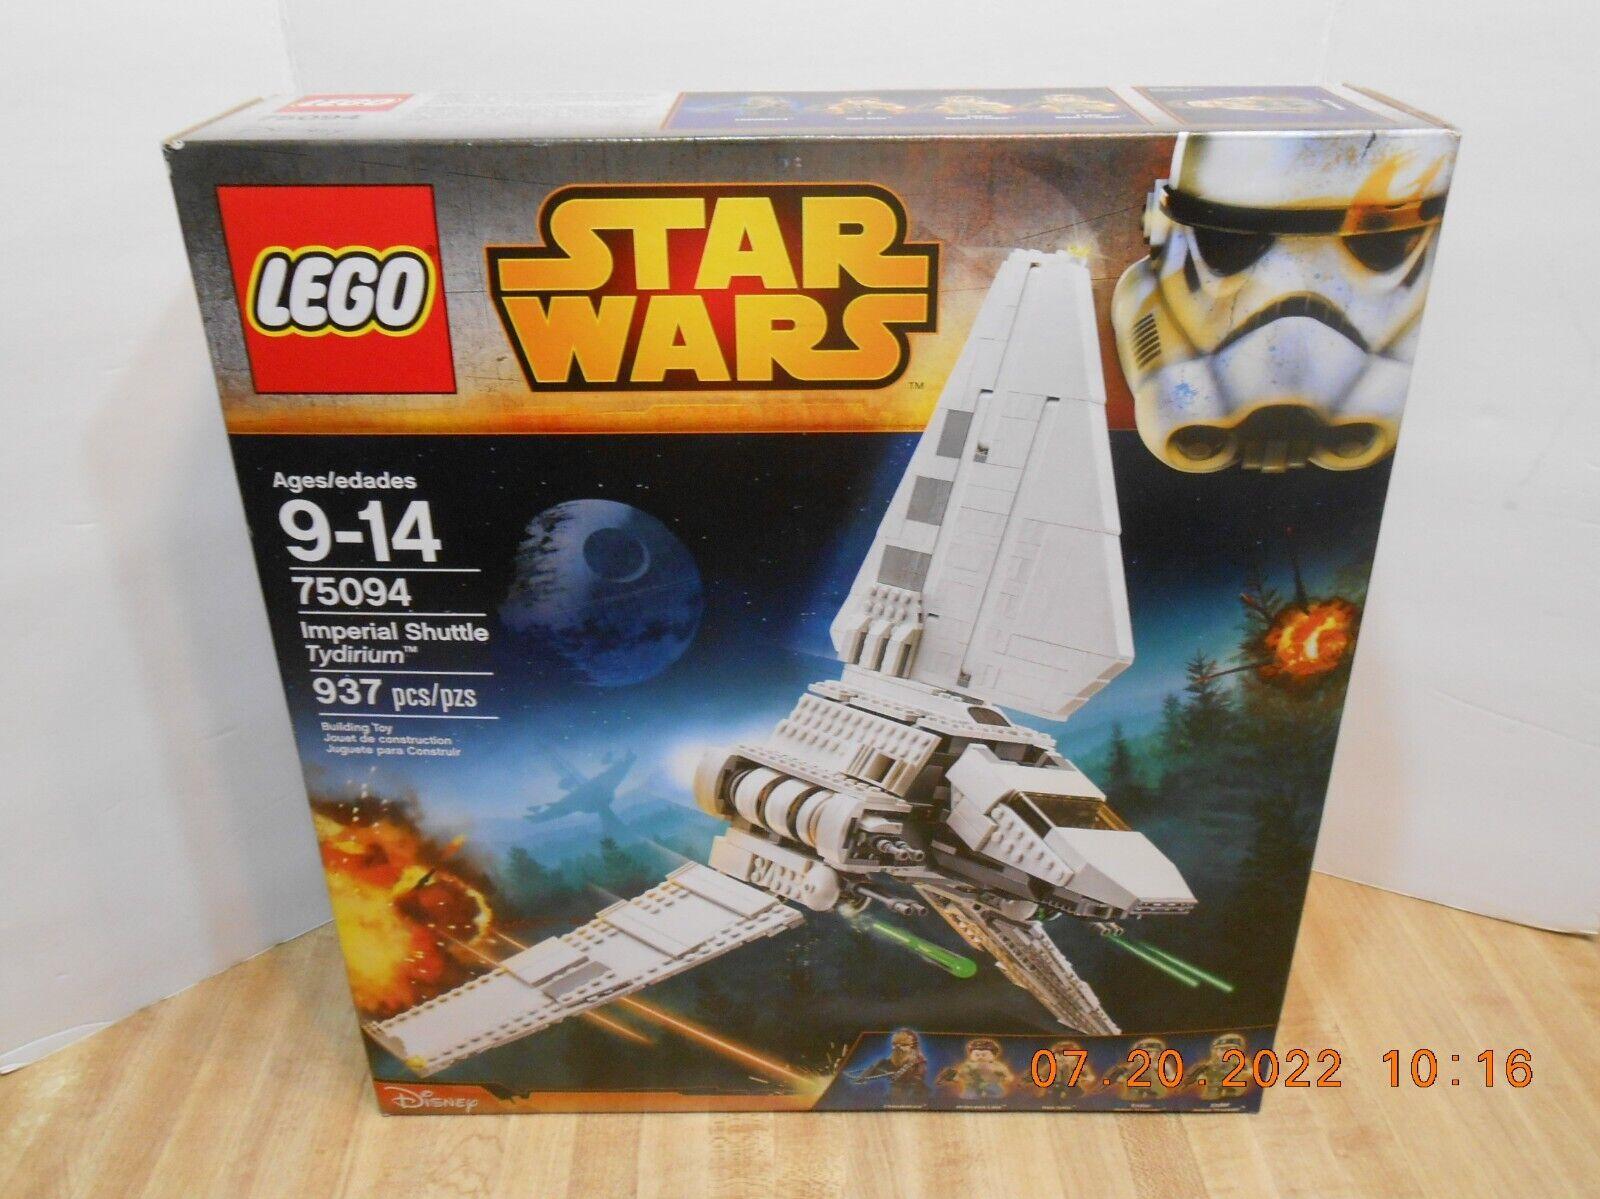 Lego Star Wars Imperial Shuttle Tydirium New Sealed See Pics